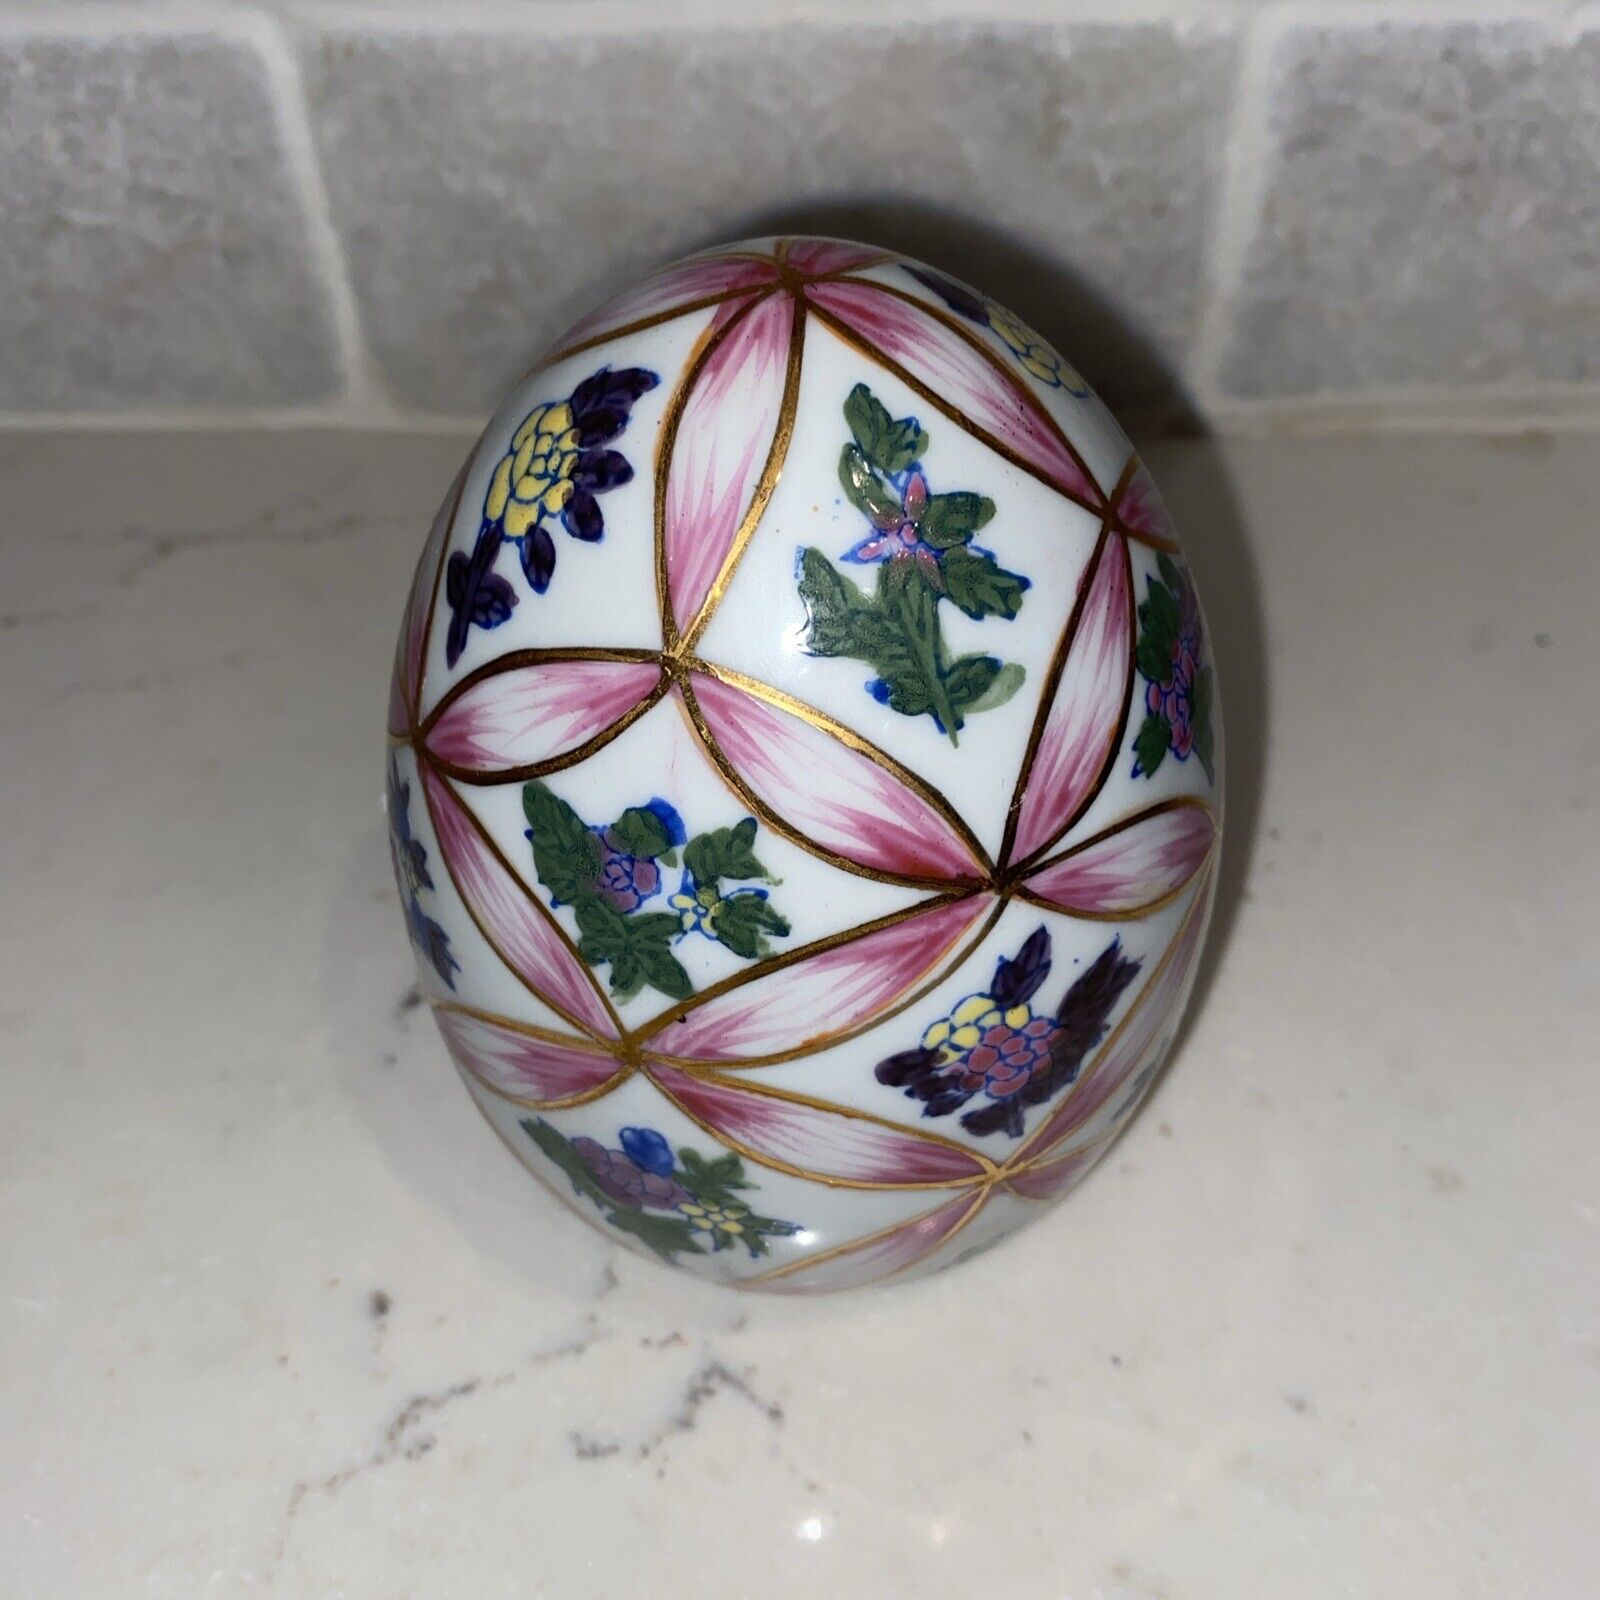 Hand Painted Chinese Ceramic Decorative Egg